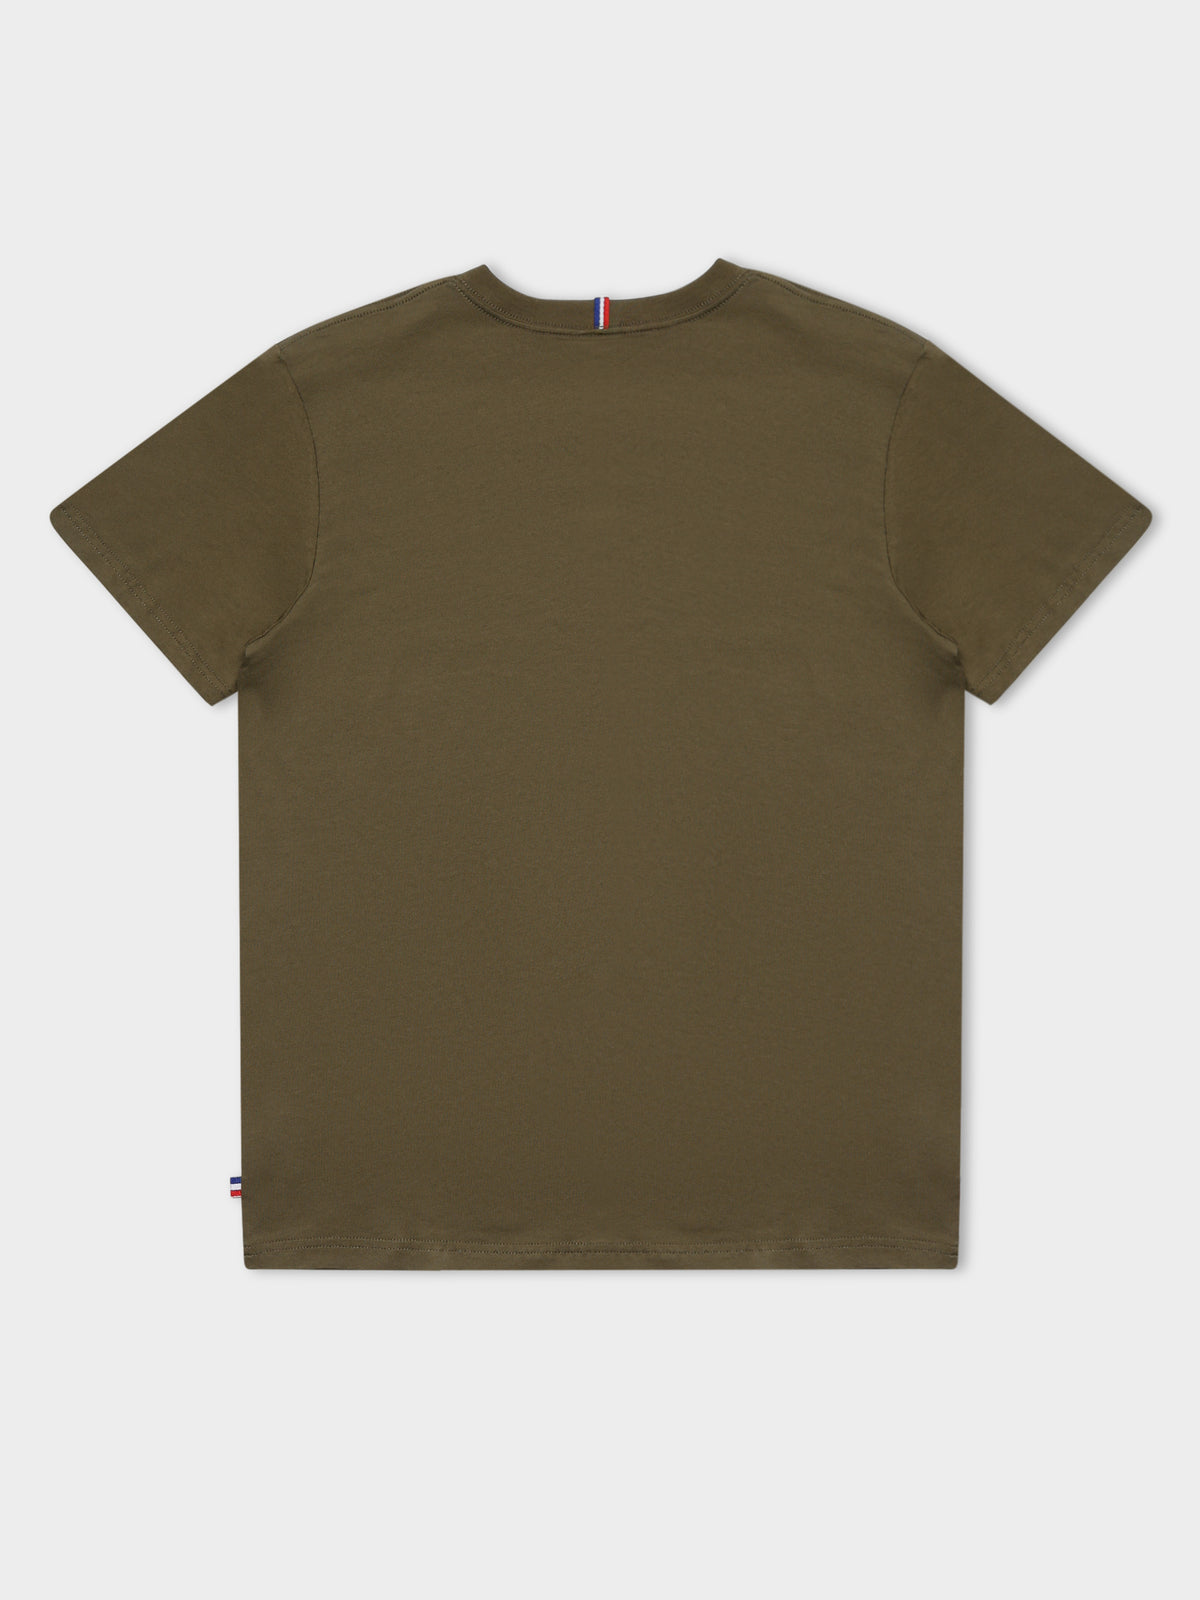 Essential T-Shirt in Khaki Green